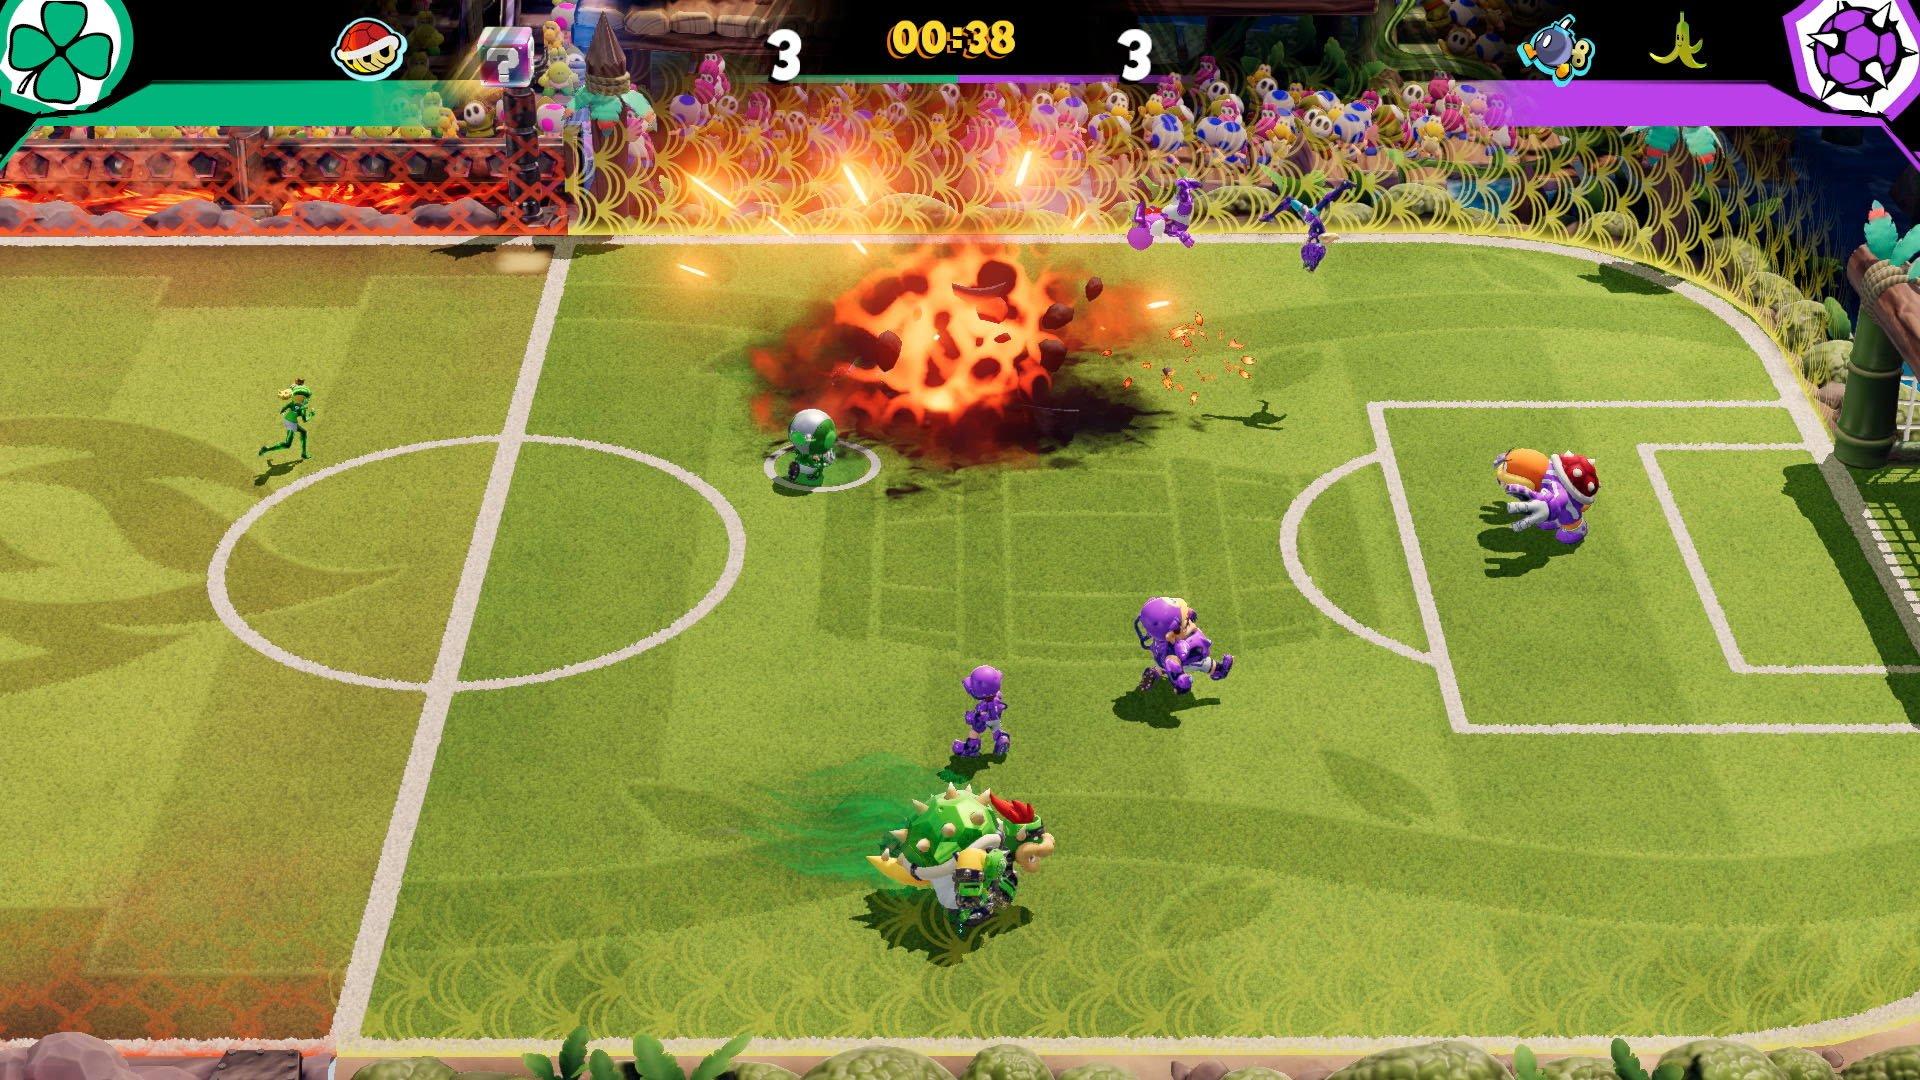 Nintendo  Mario Strikers: Battle League Fussball Nintendo Switch 